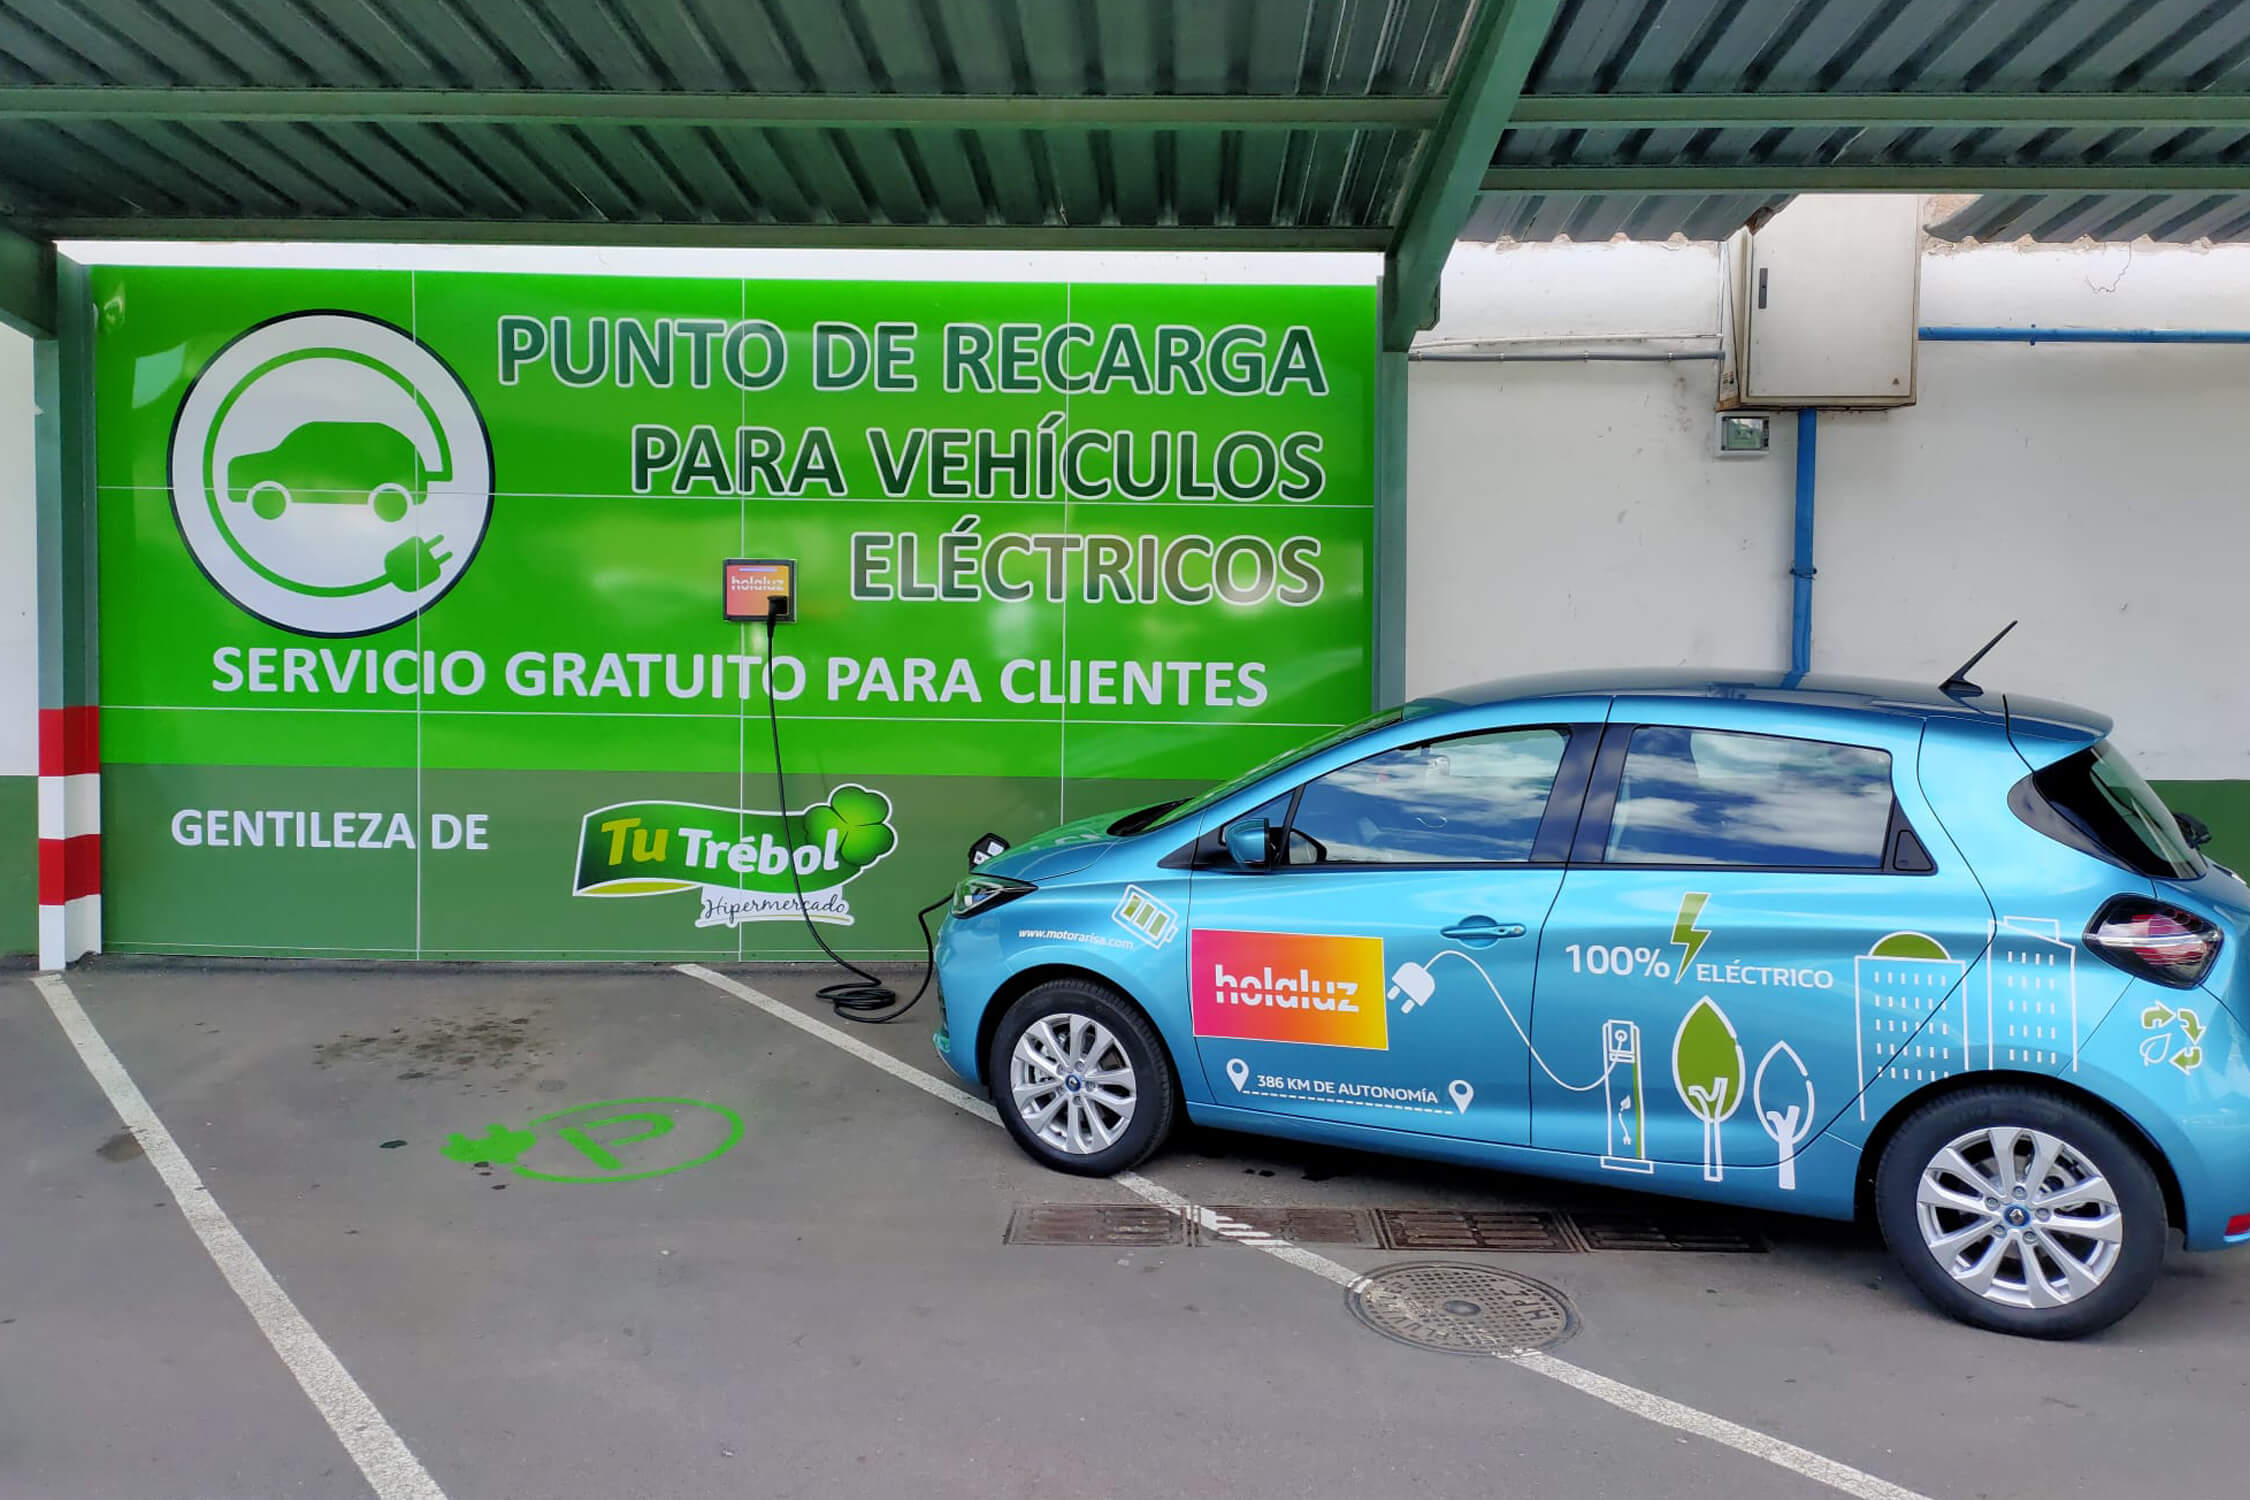 Punto de recarga para vehículos eléctricos en Tu Trébol Hola Luz Canargy